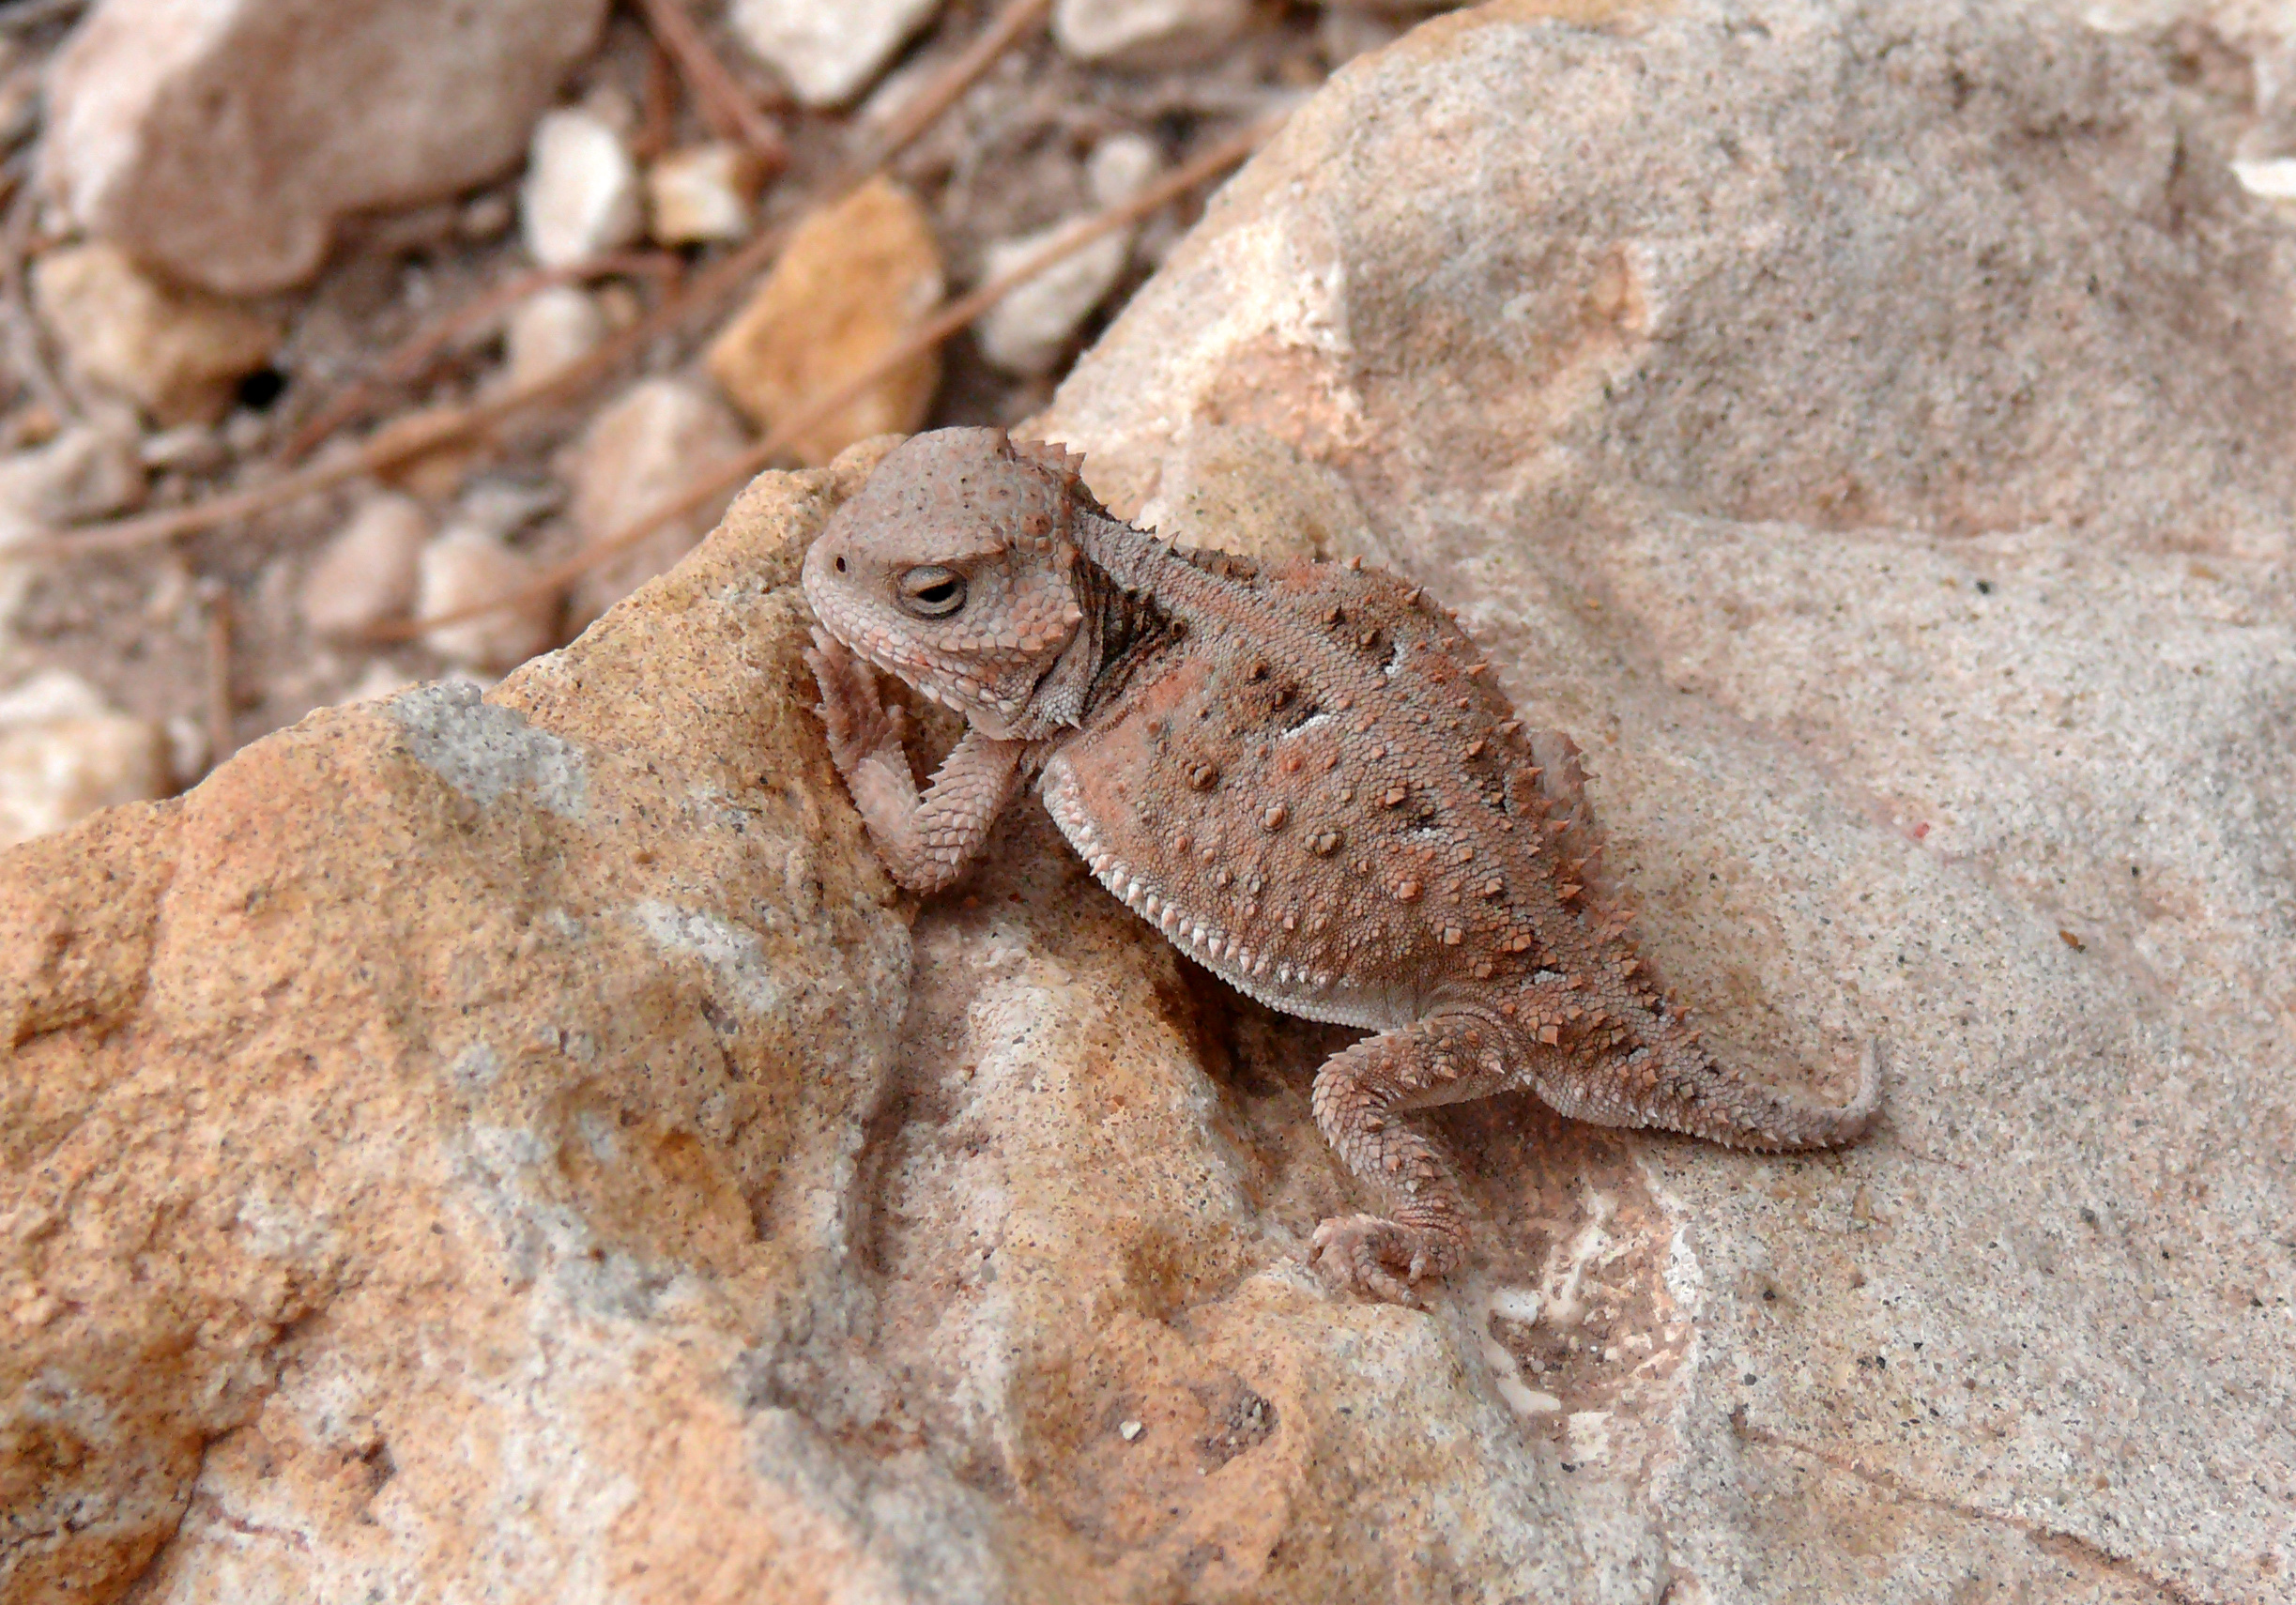 A greater short-horned lizard sitting on a rock.